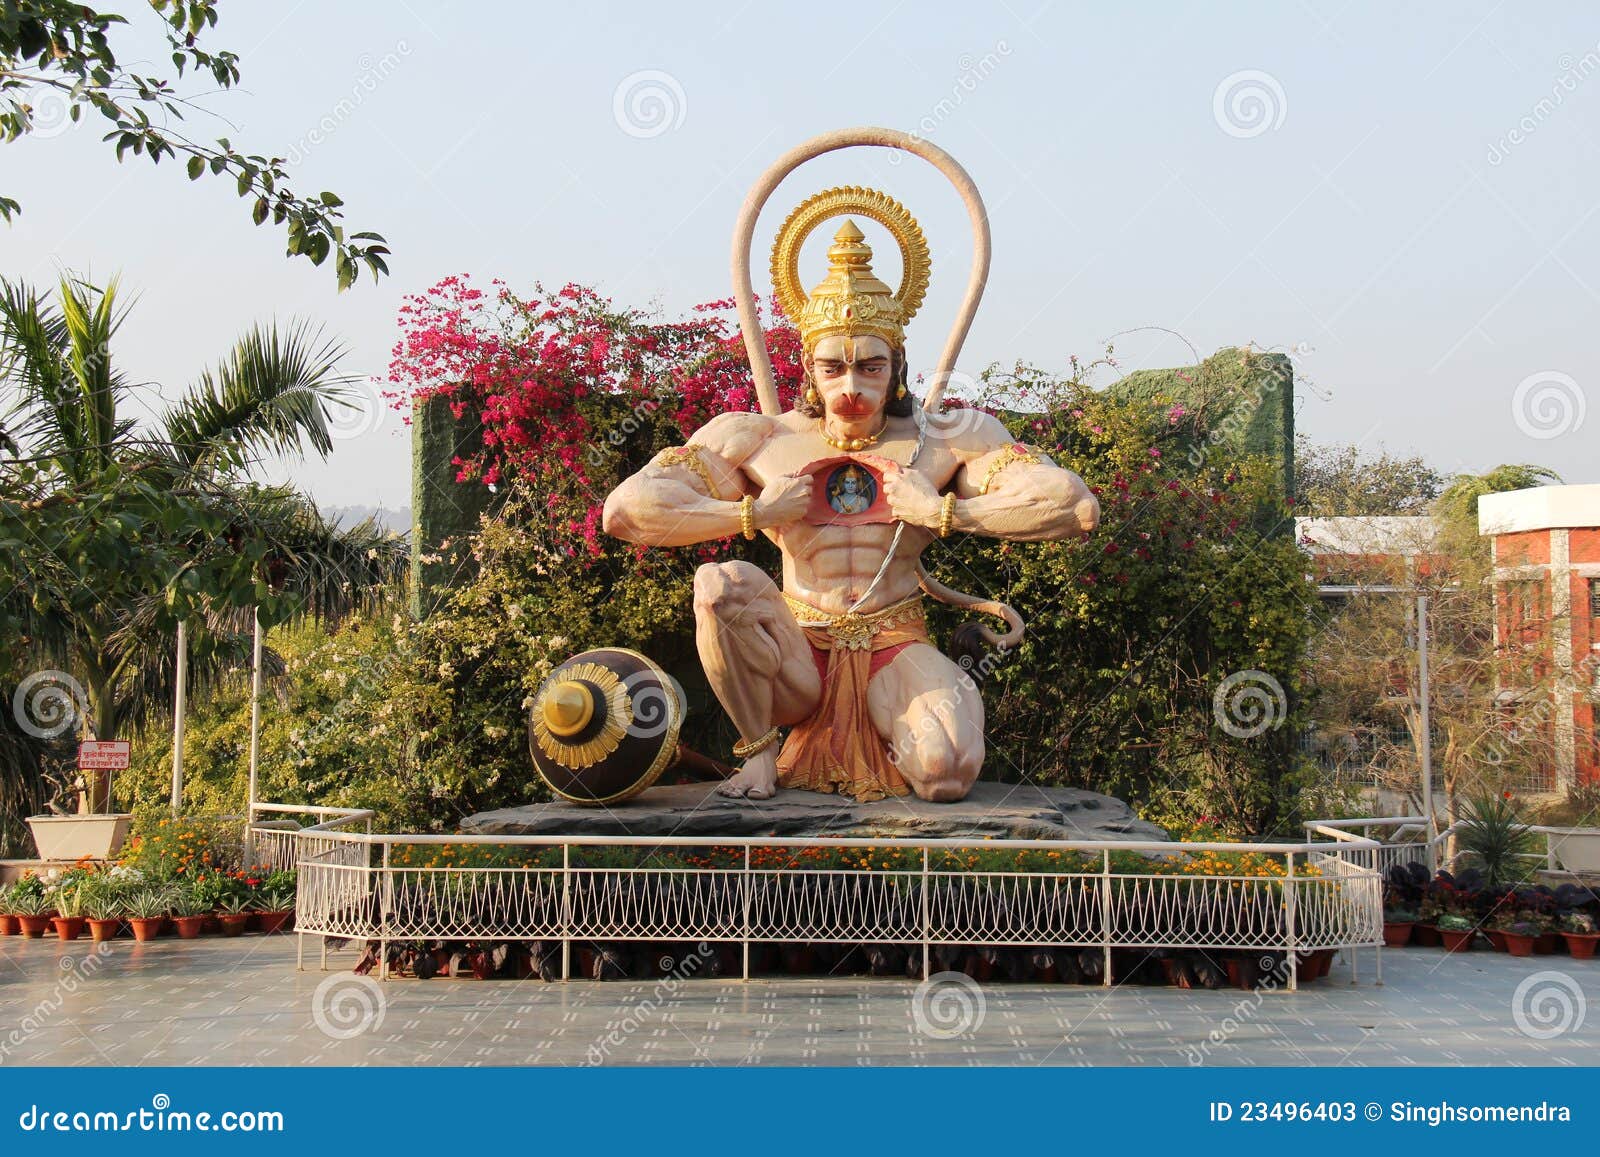 403 Stone Statue Hindu God Hanuman Stock Photos - Free & Royalty ...